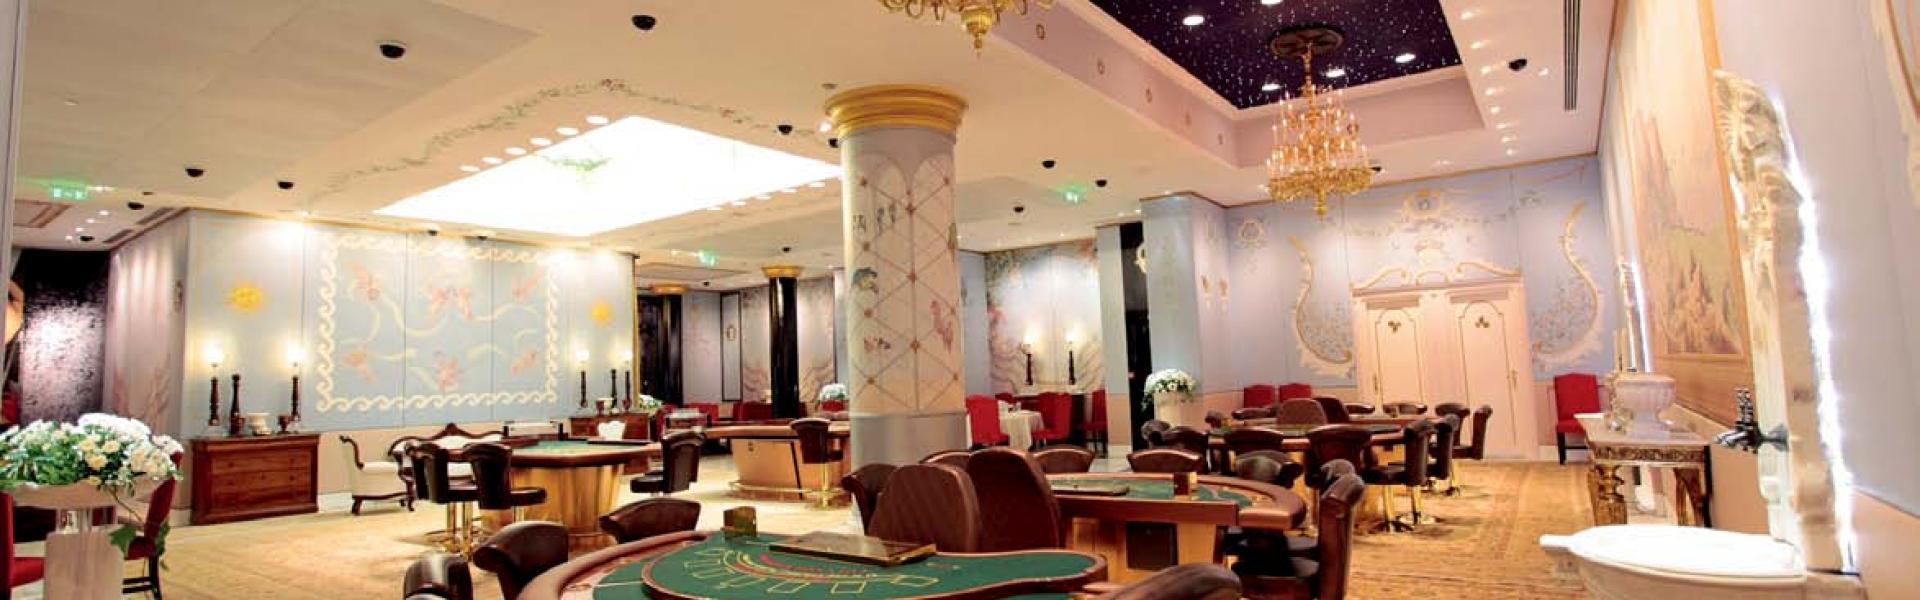 Club Hotel Casino Loutraki room